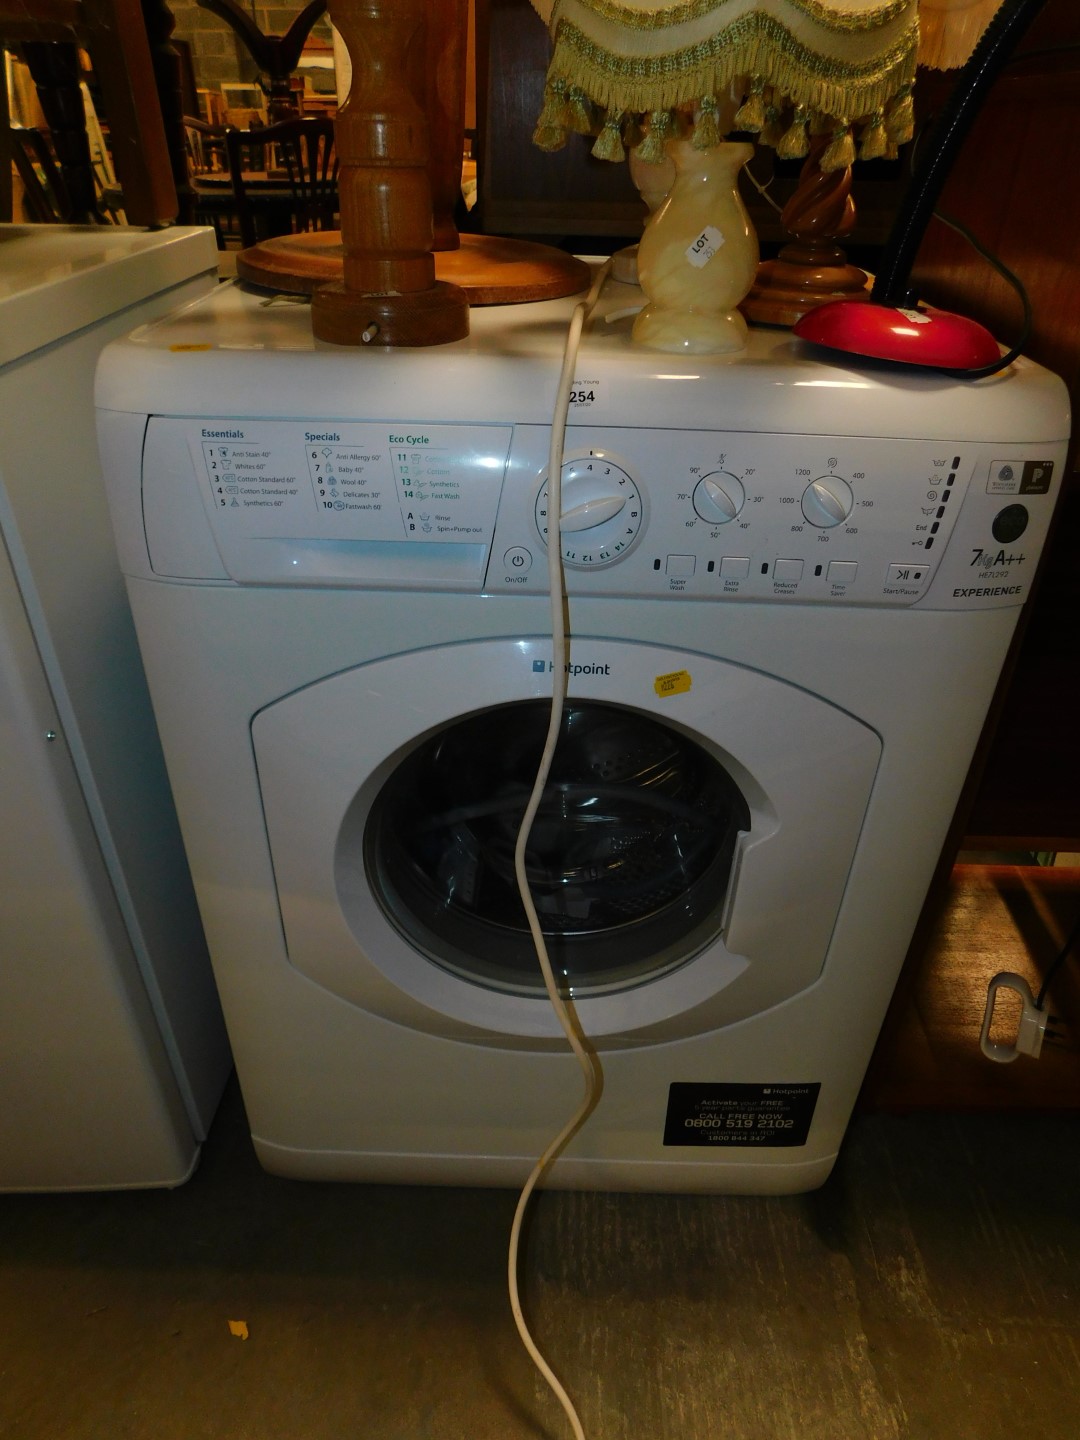 A Hotpoint 7kg washing machine, model HE7L292.